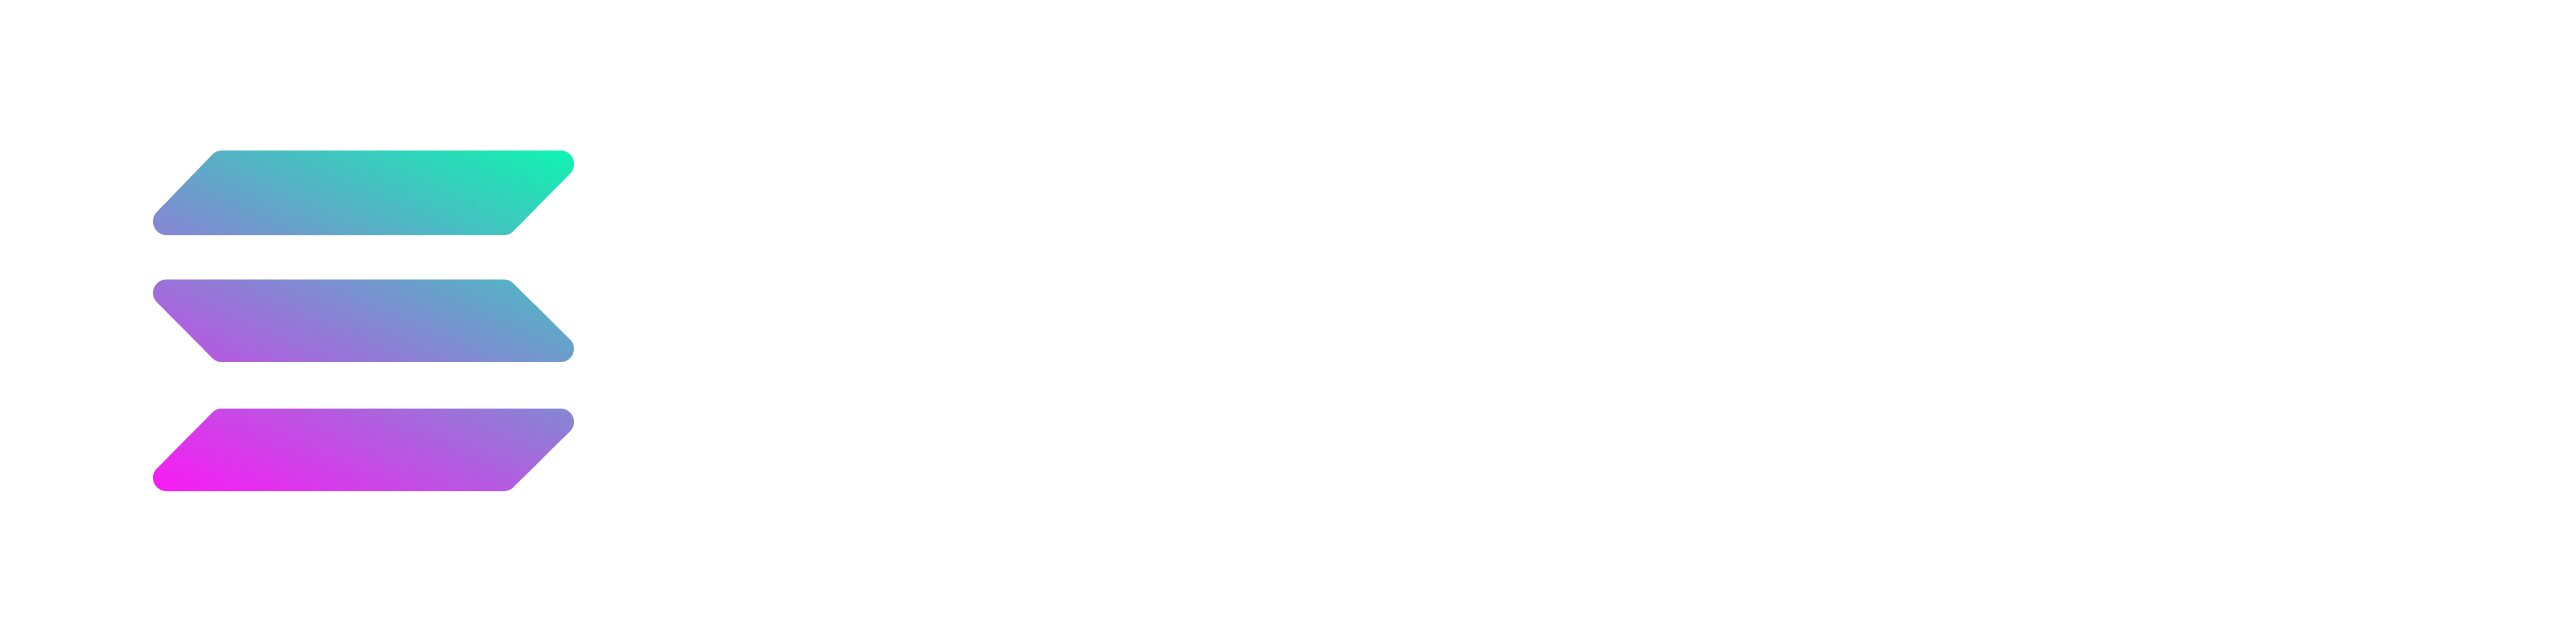 Stepn solano. Solana логотип. Солана крипта. Солана токен. Solana криптовалюта лого.